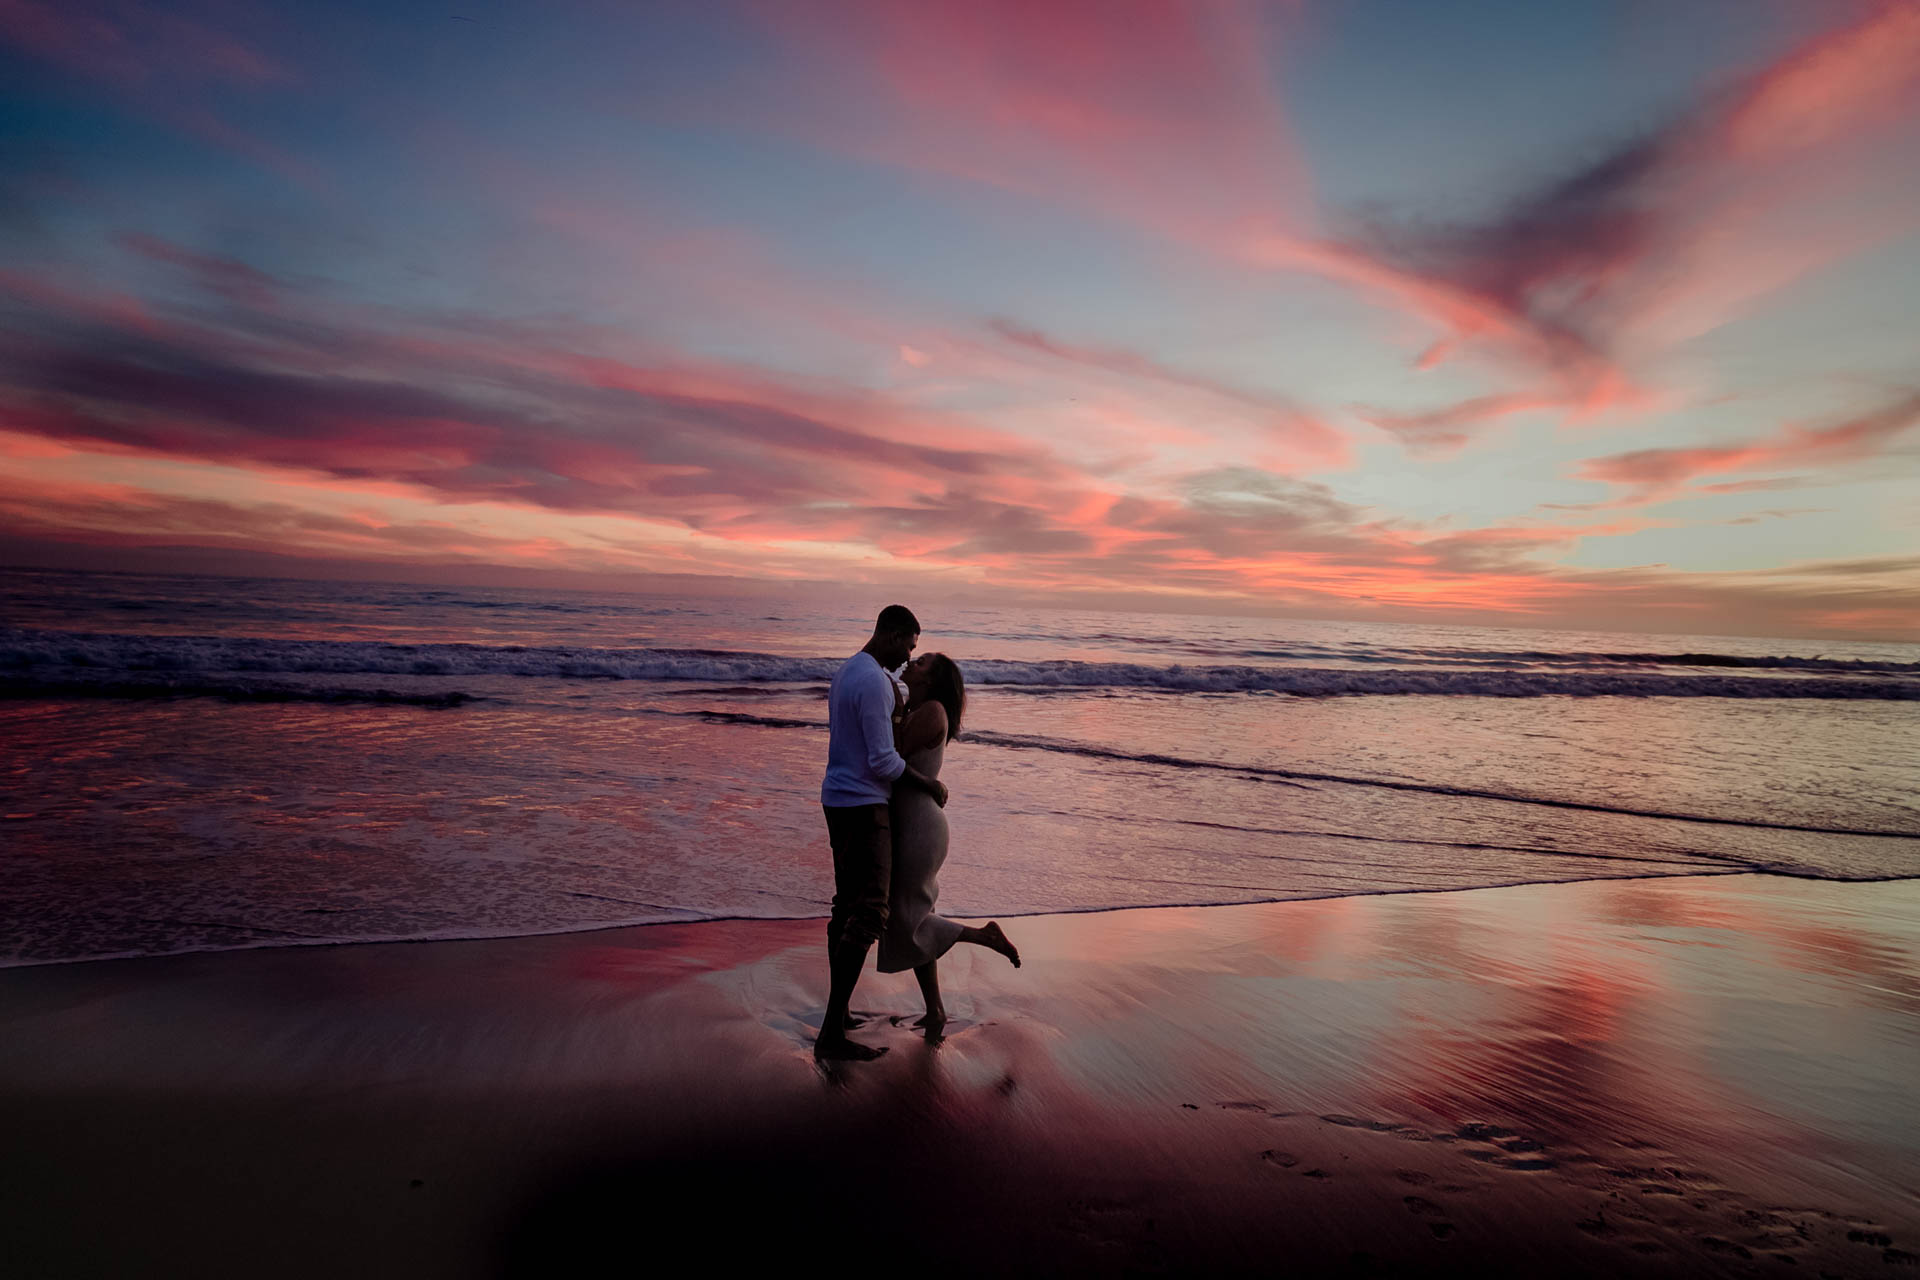 engagement photoshoot in santa monica beach at sunset, LA